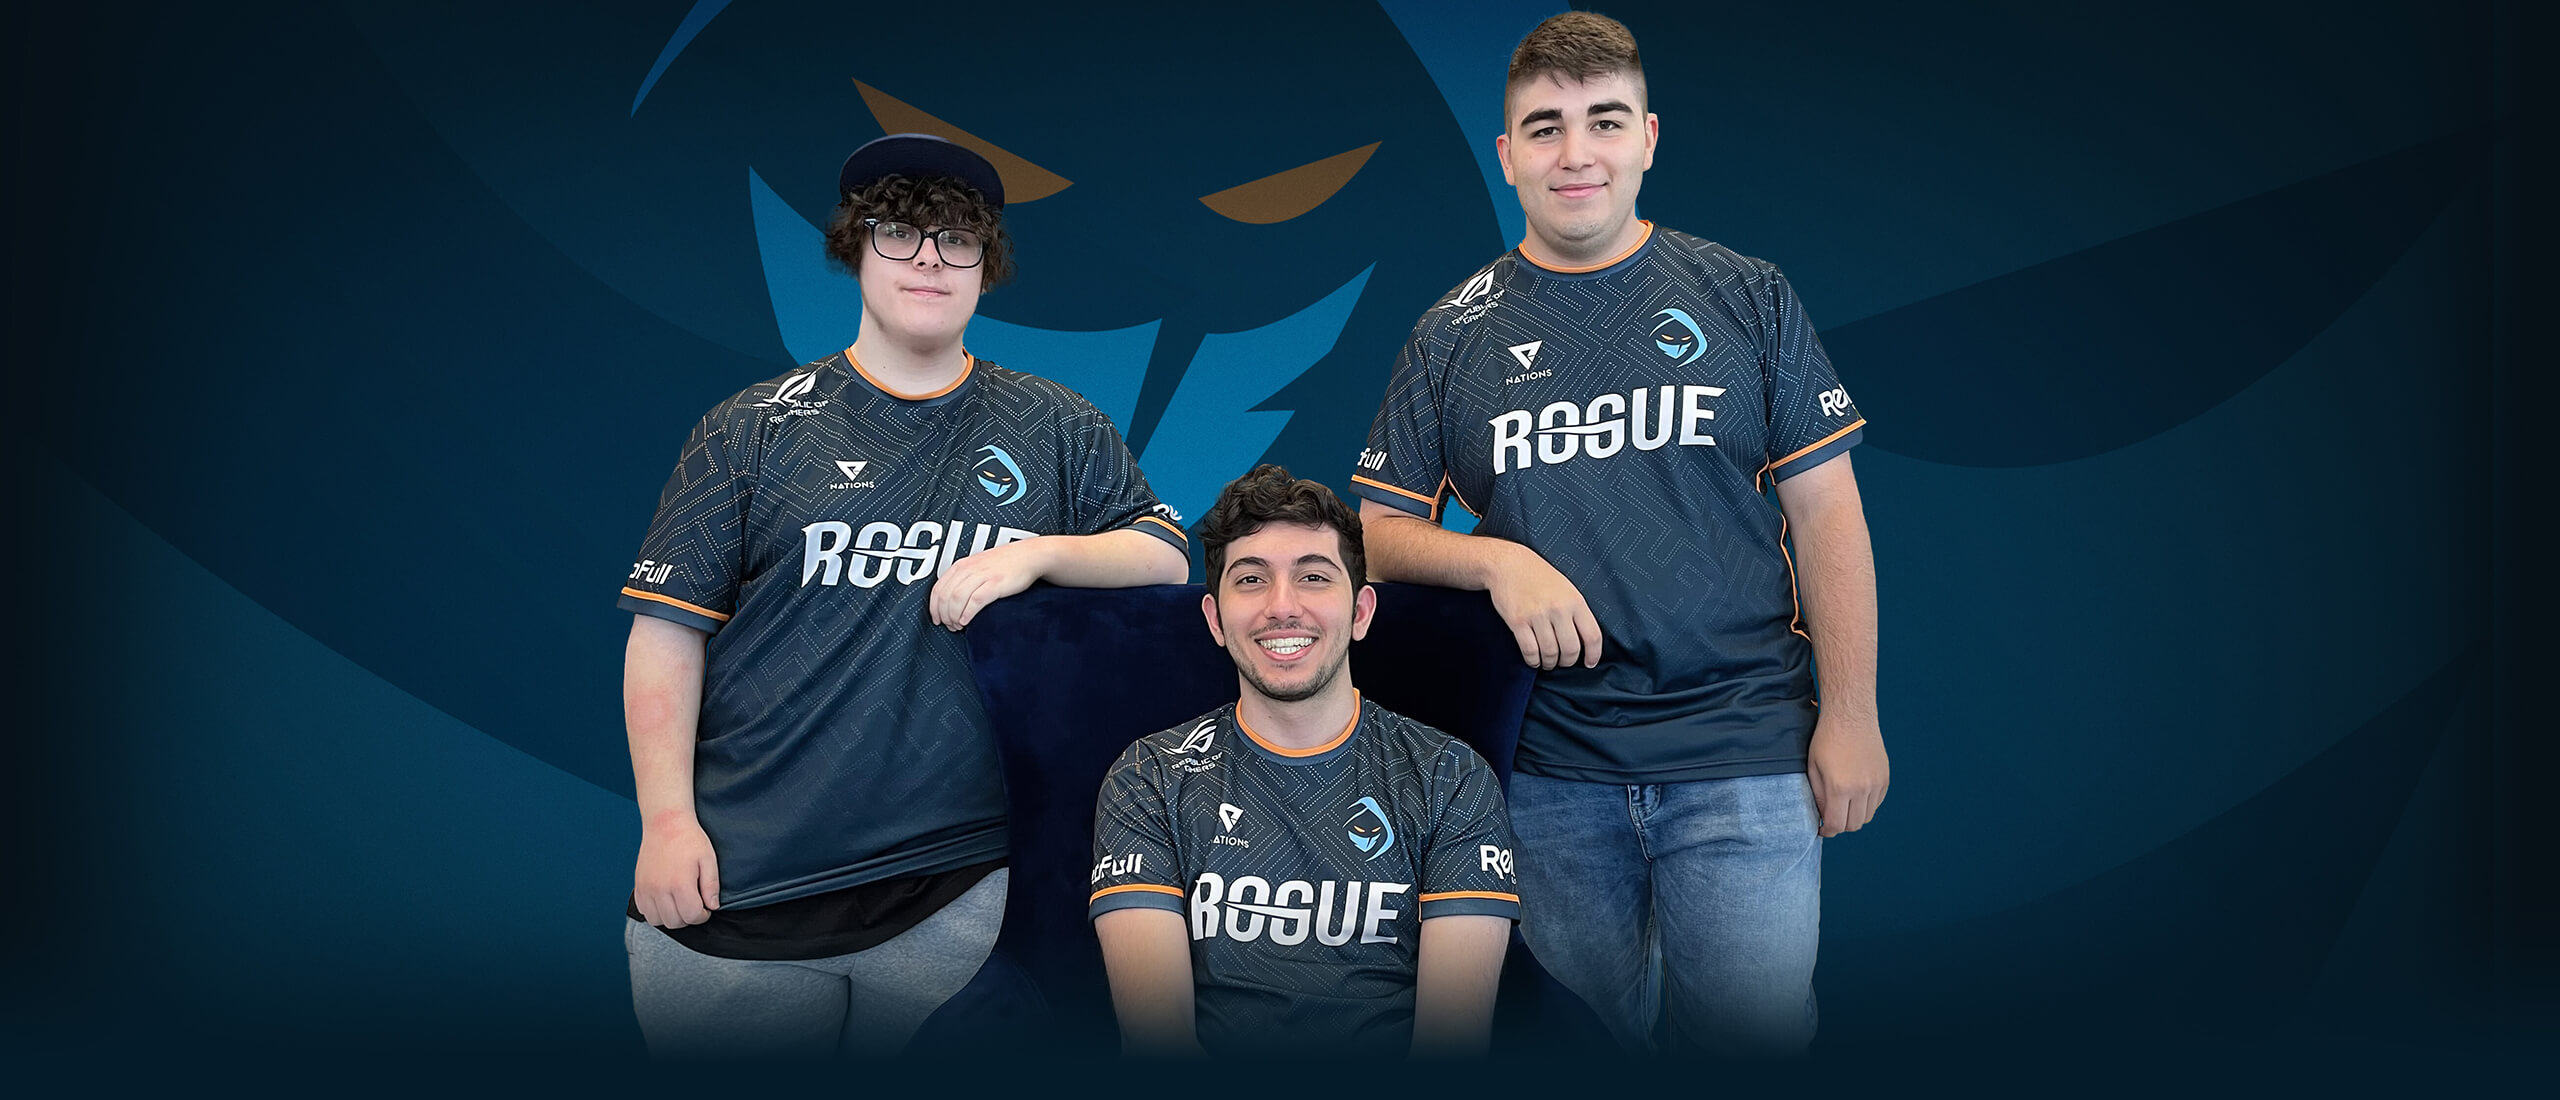 Rogue Rocket League